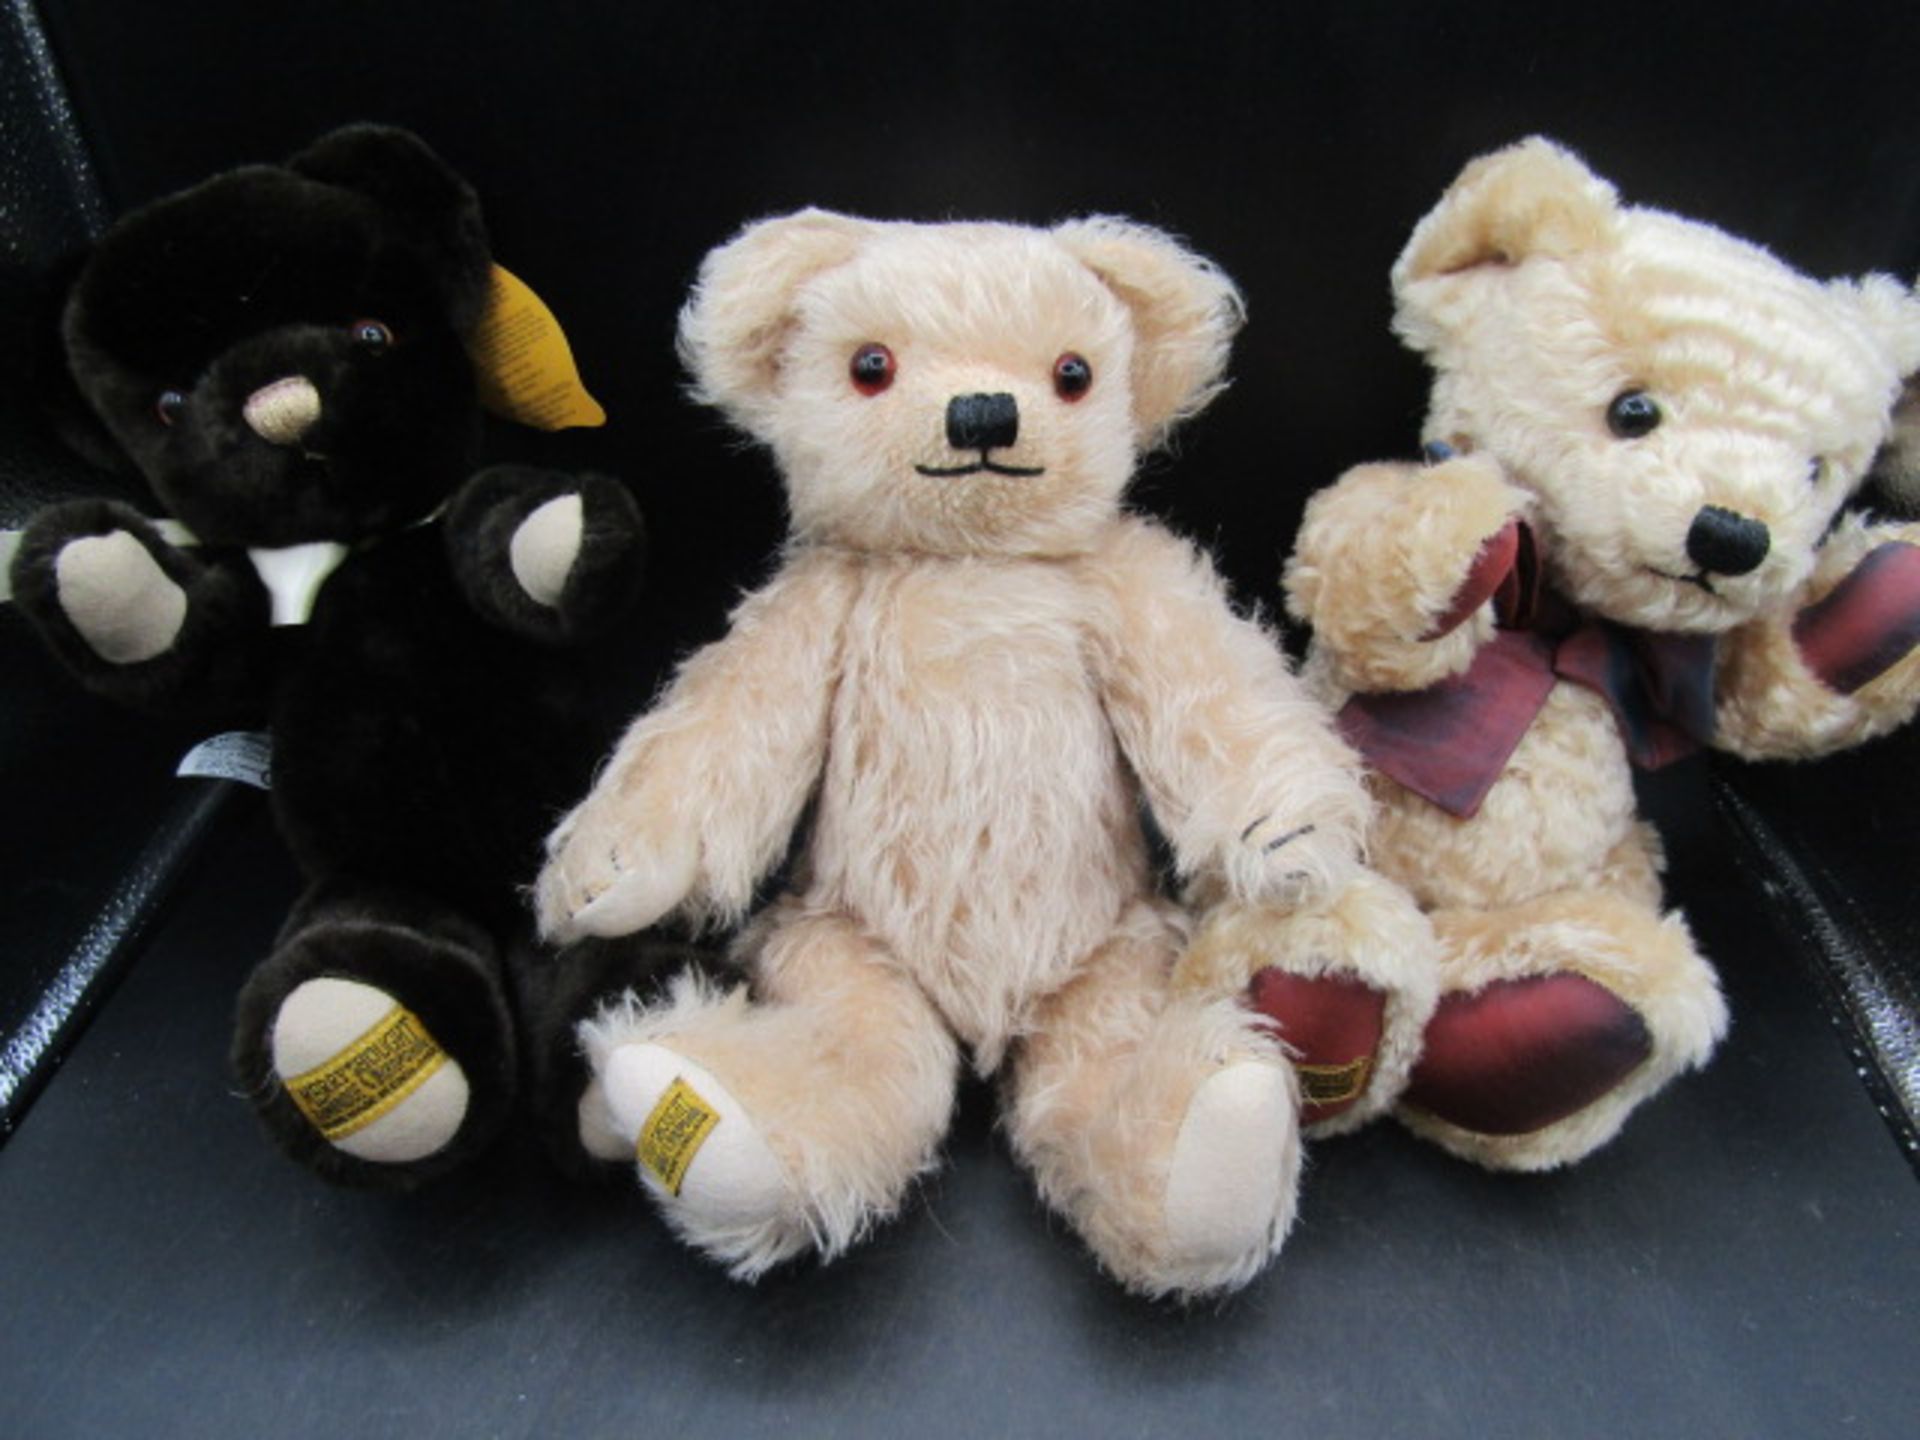 3 Merrythought bears